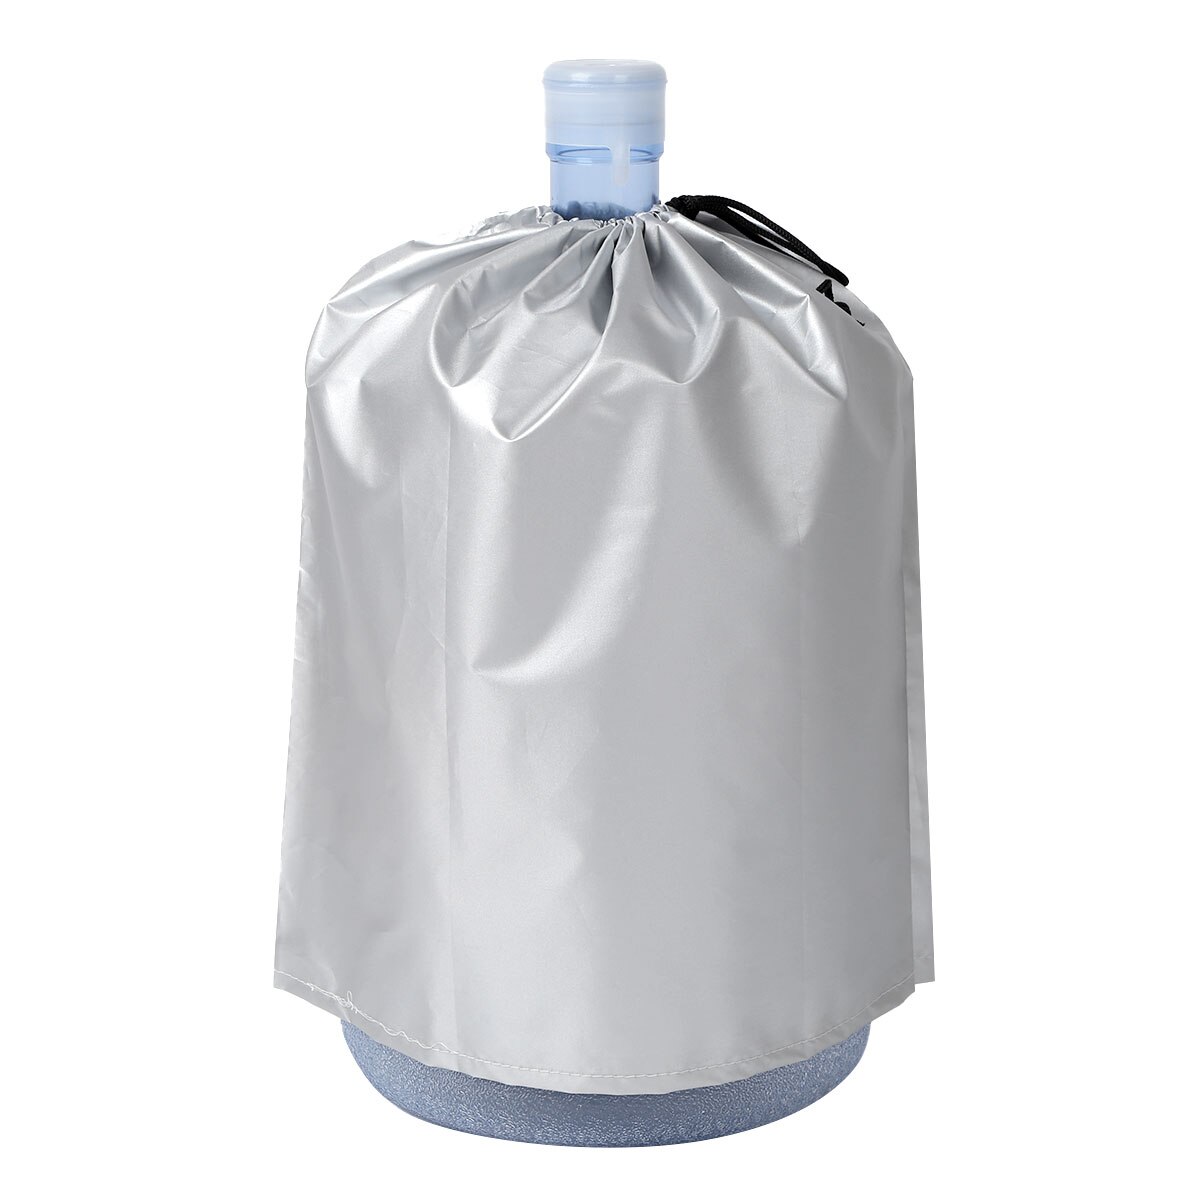 Water Dispenser Vat Cover Duurzaam Stofdicht Stof Covers Voor 5 Gallon Waterfles Herbruikbare Meubels Cover Protector